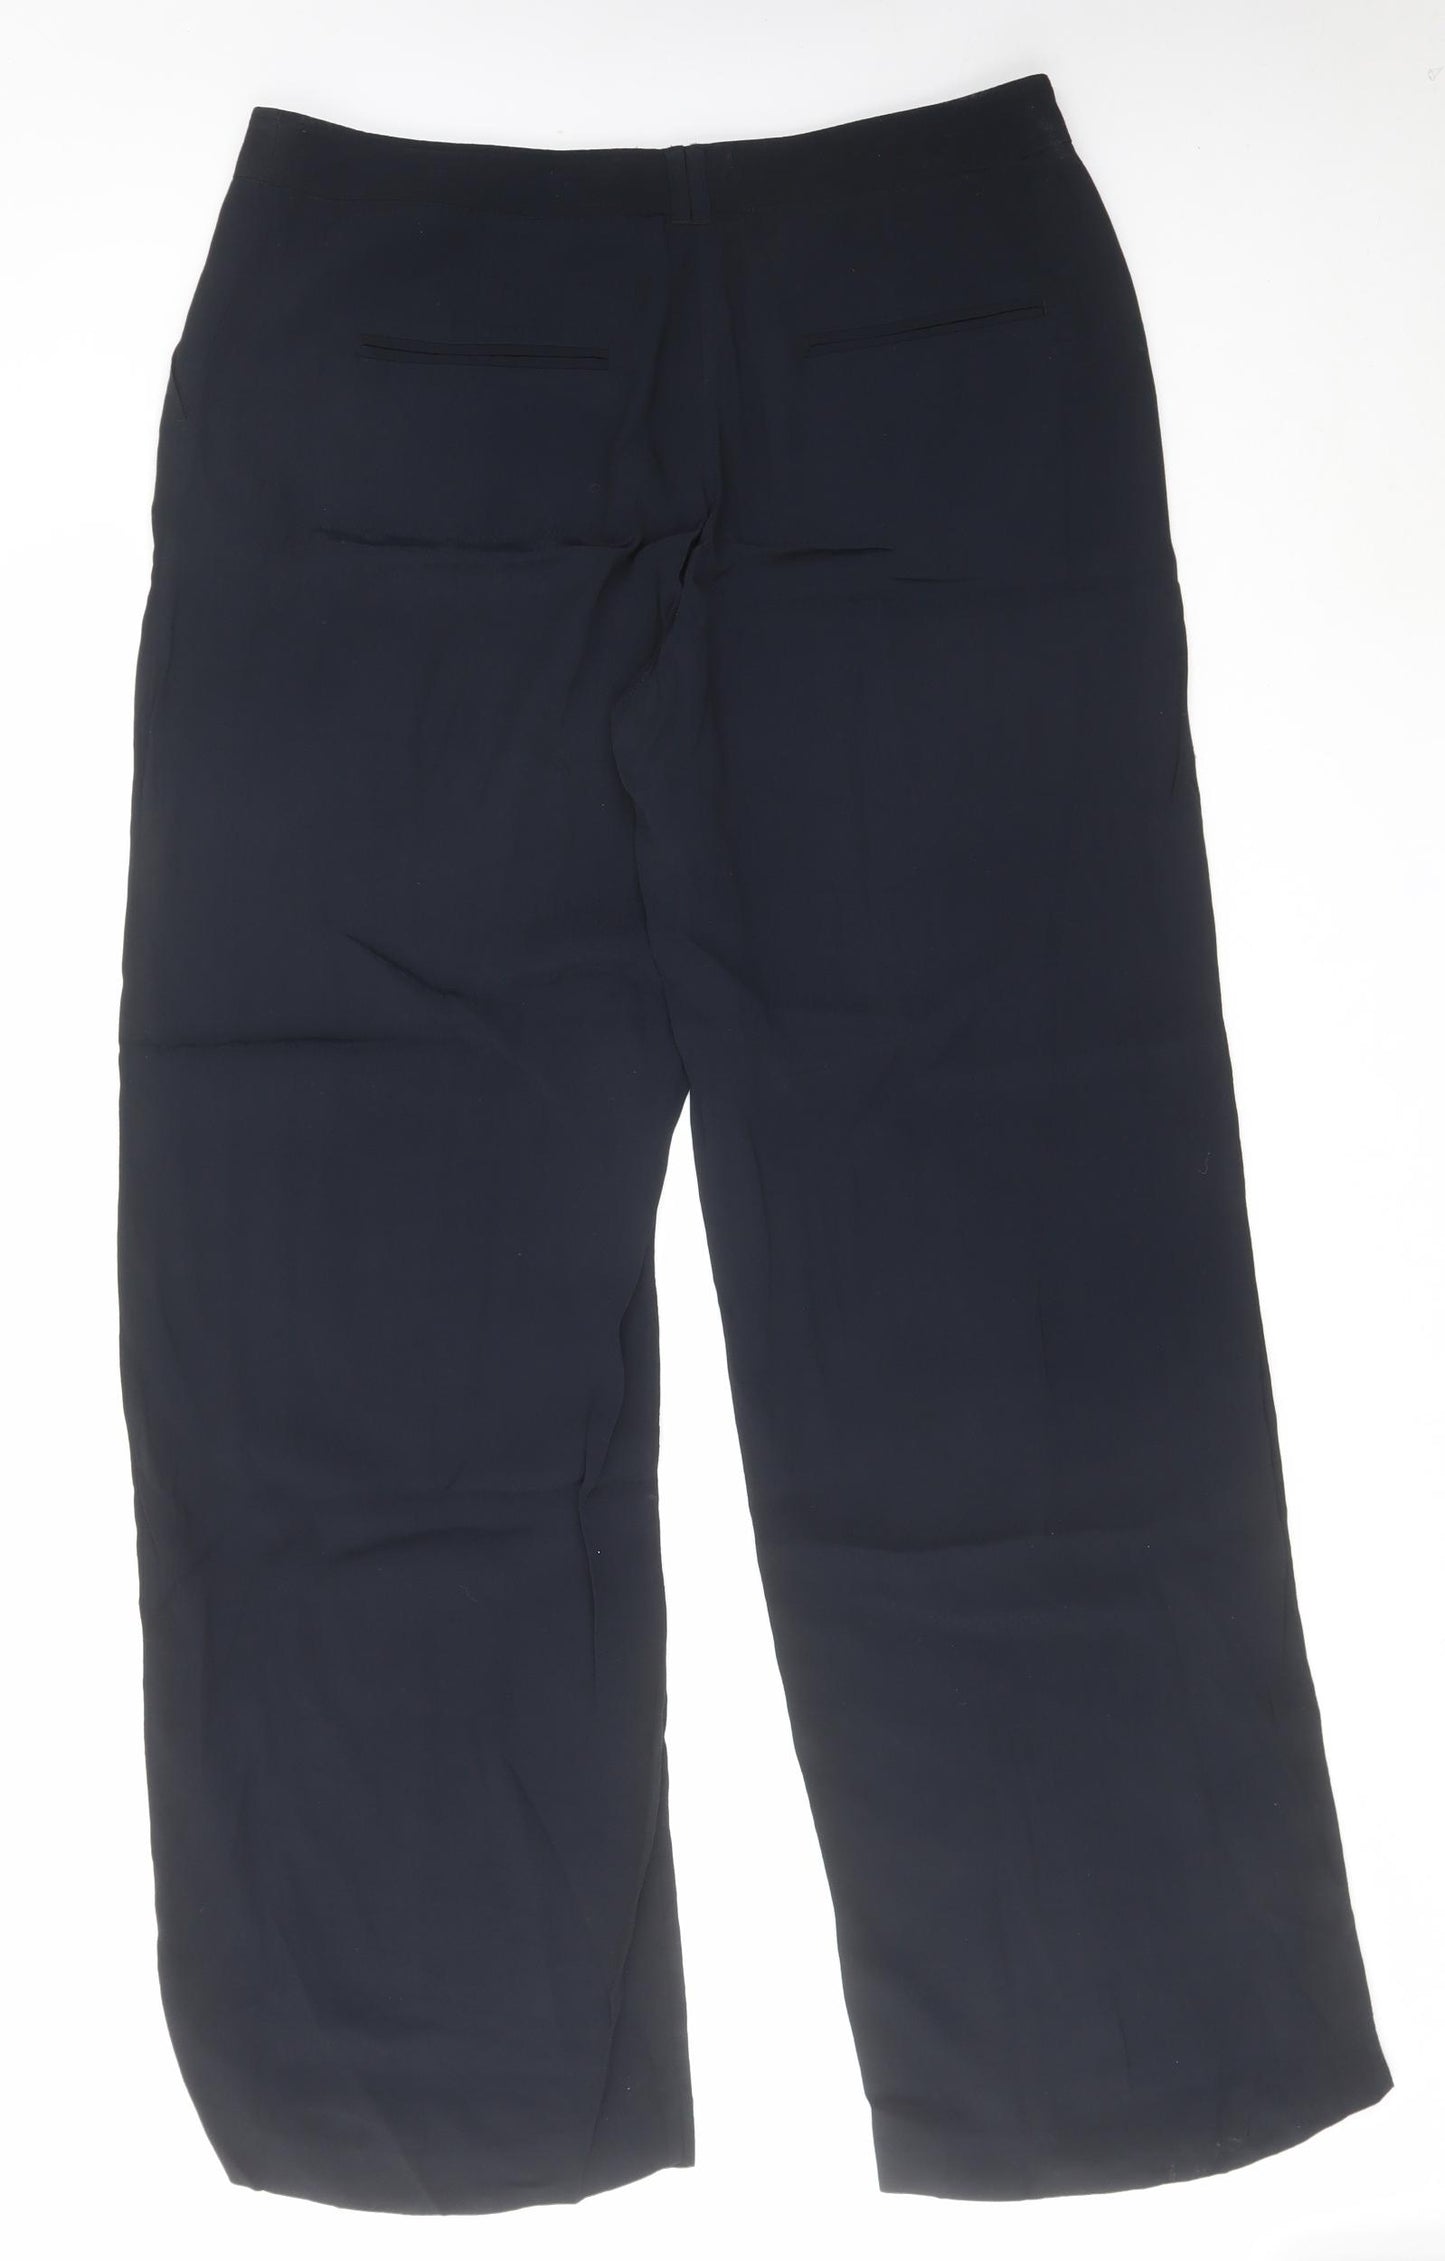 NEXT Womens Blue Viscose Trousers Size 16 L34 in Regular Zip